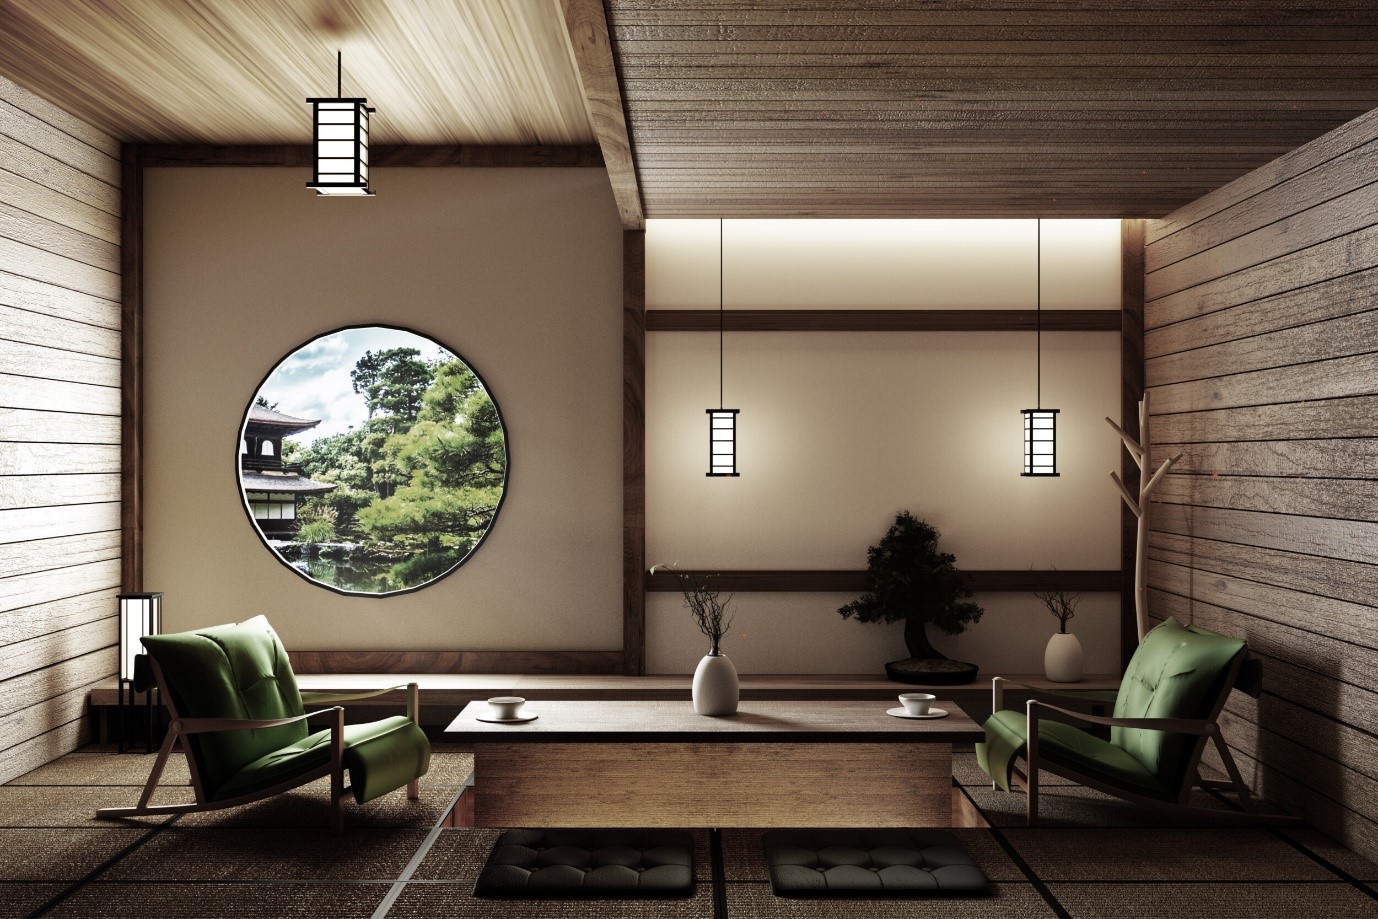 Asian Zen Interior Design – The Best Way To Master It